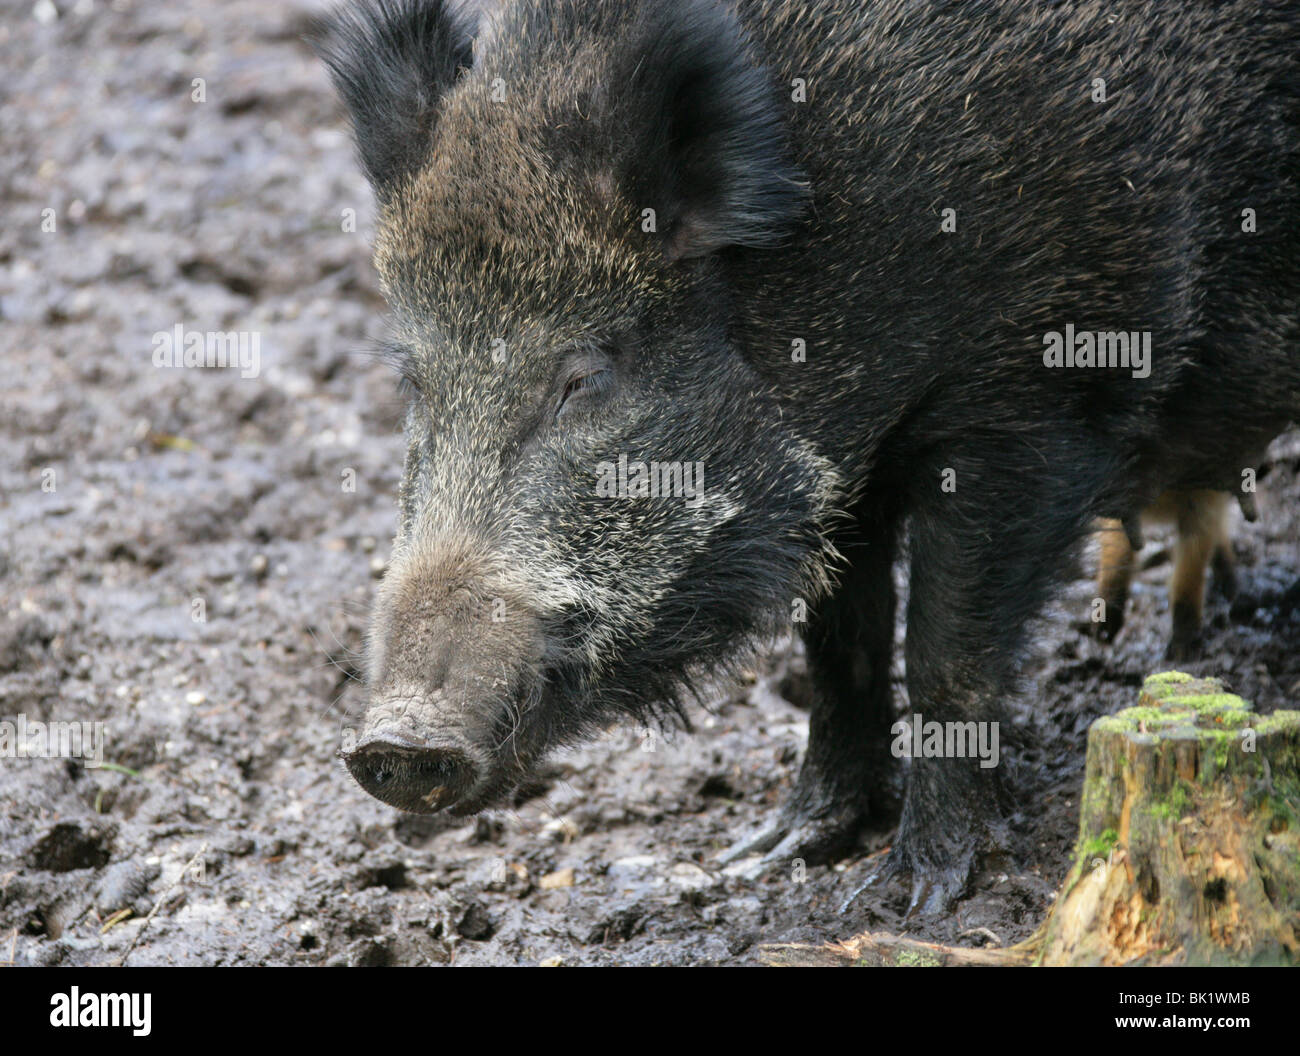 European Wild Boar Sow, Sus scrofa scrofa, Suidae. Stock Photo